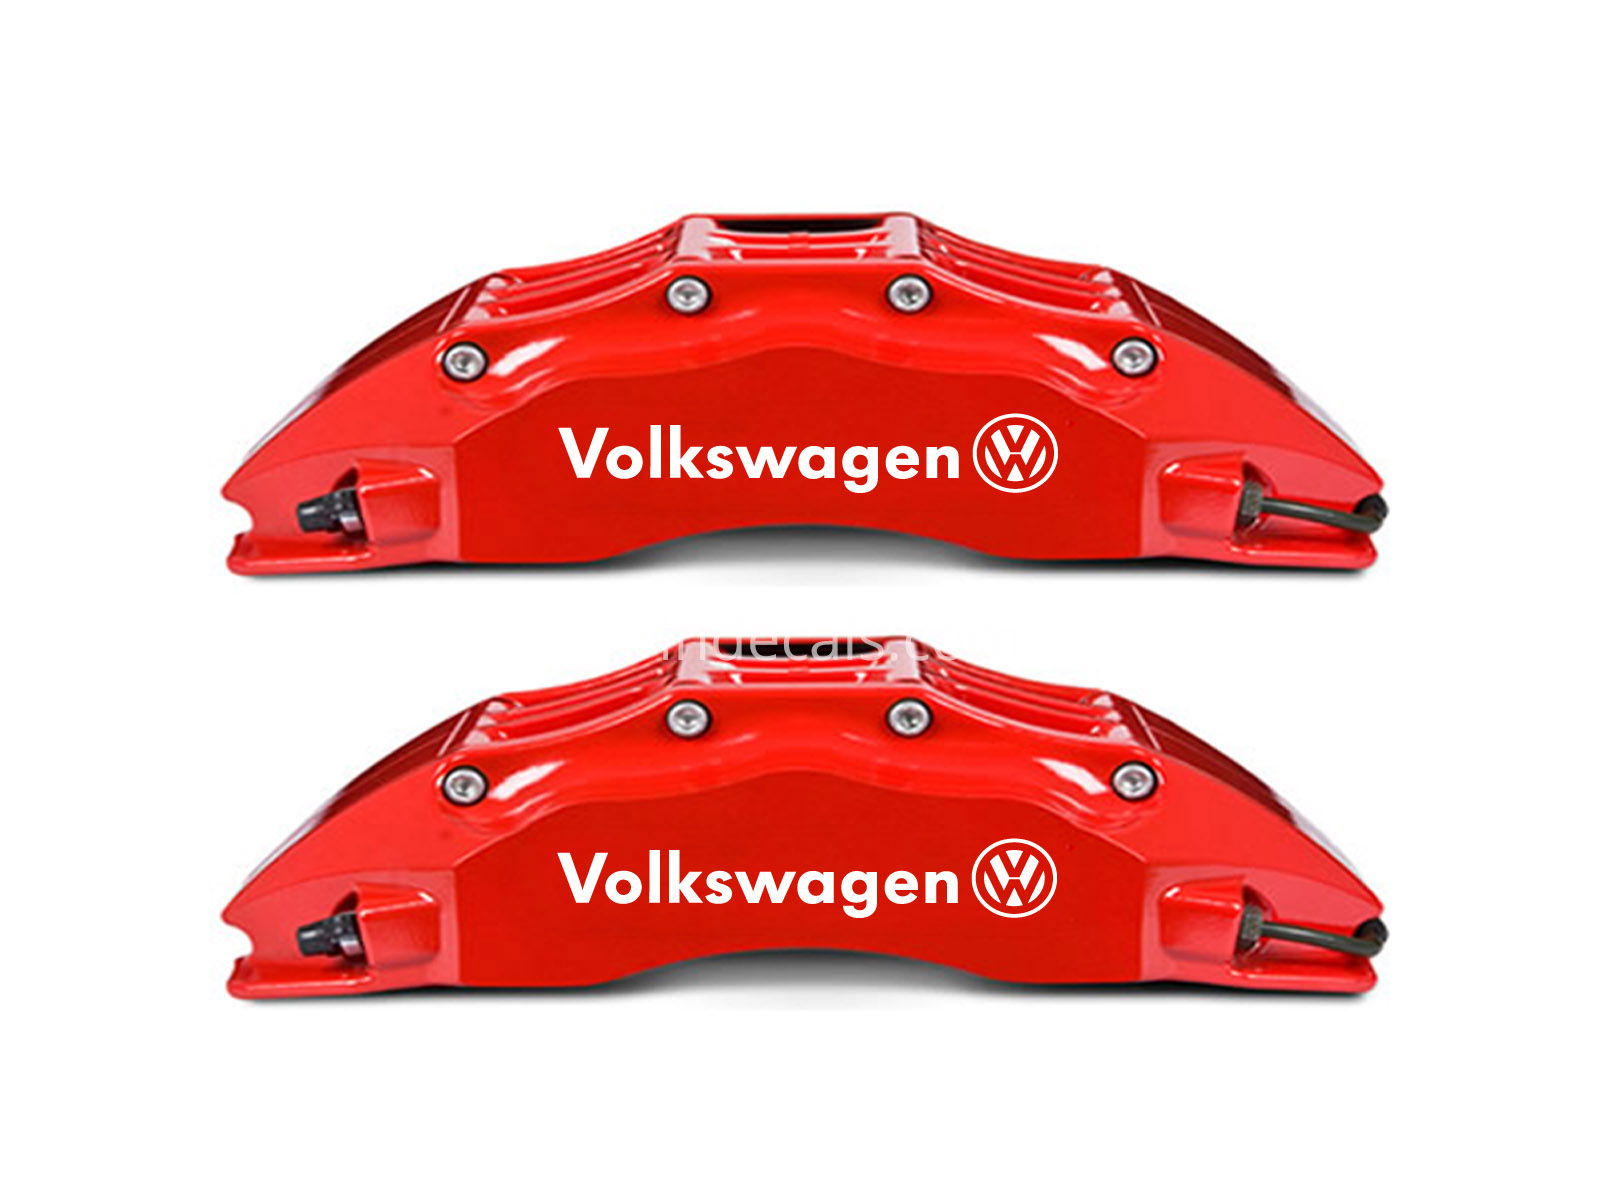 6 x Volkswagen Stickers for Brakes - White